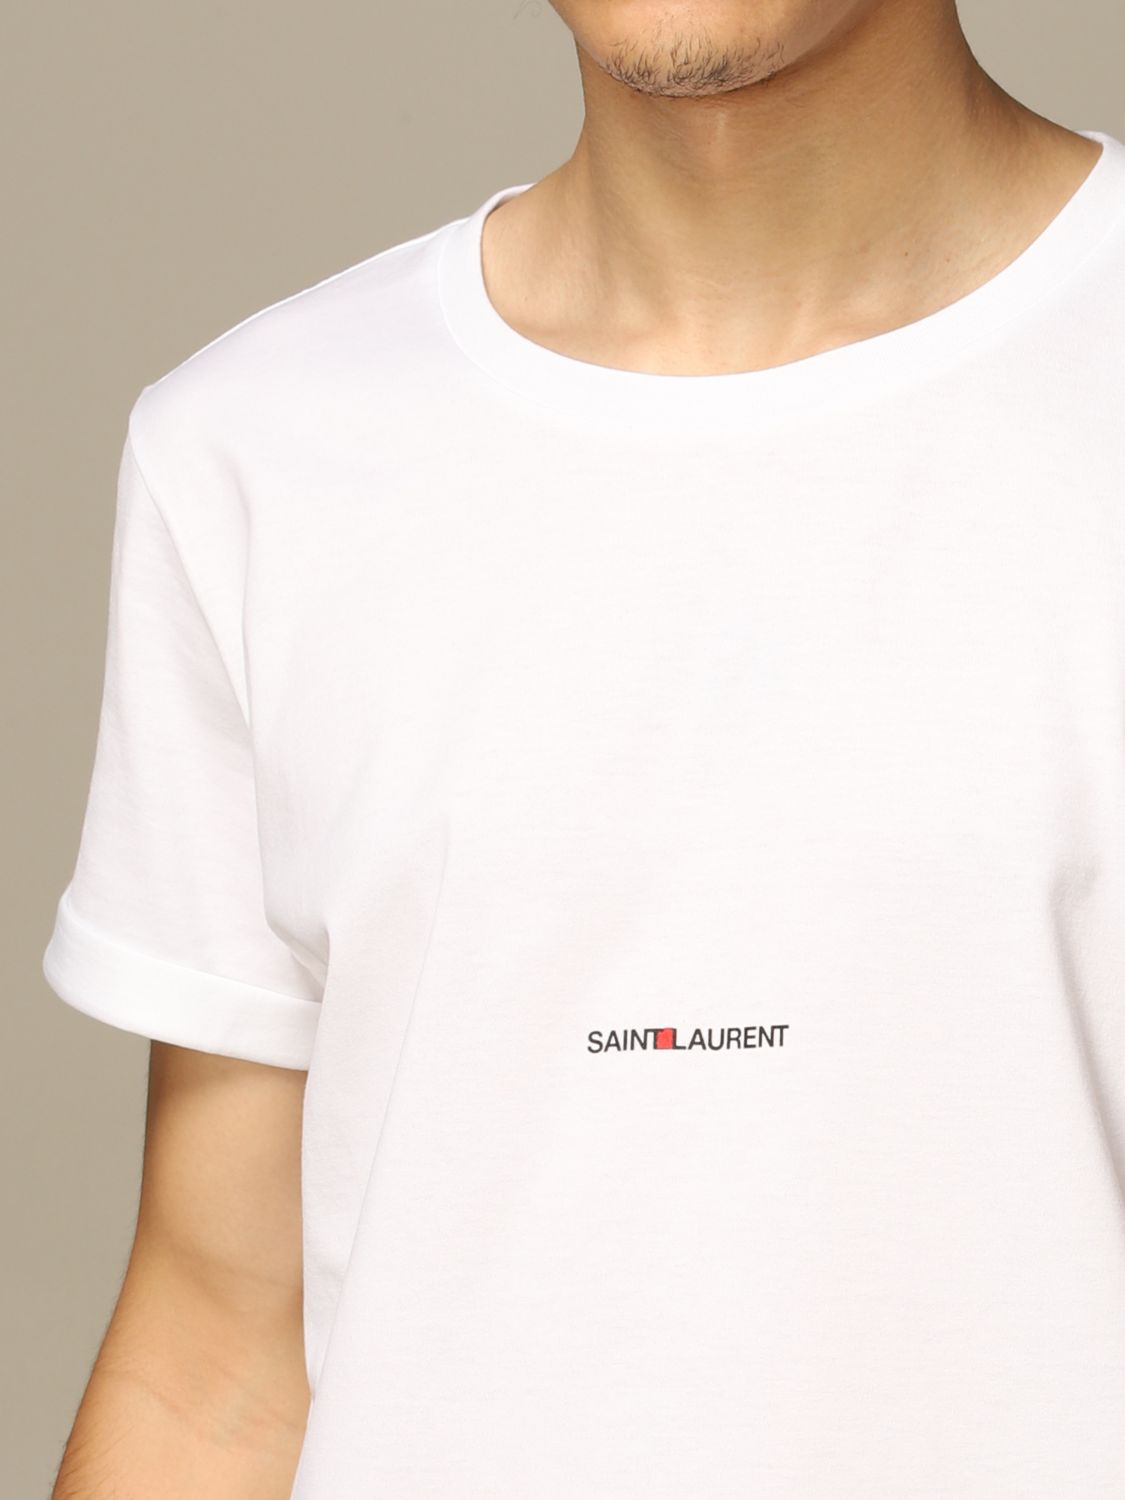 Saint Laurent T Shirt Top Sellers, 58% OFF | www.ingeniovirtual.com